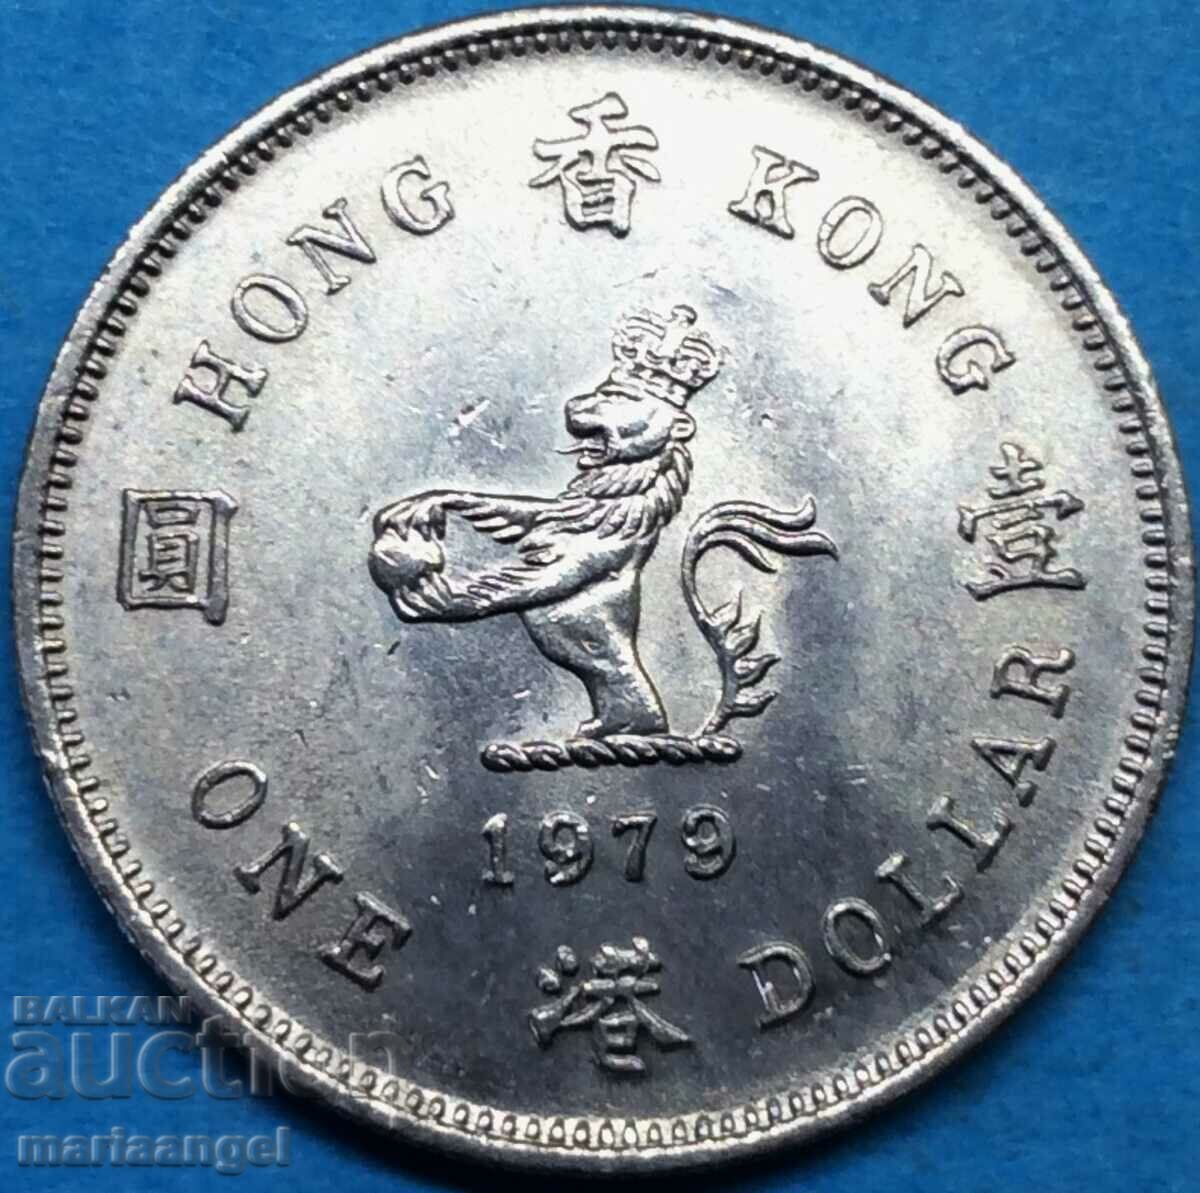 Hong Kong $1 1979 Elizabeth II